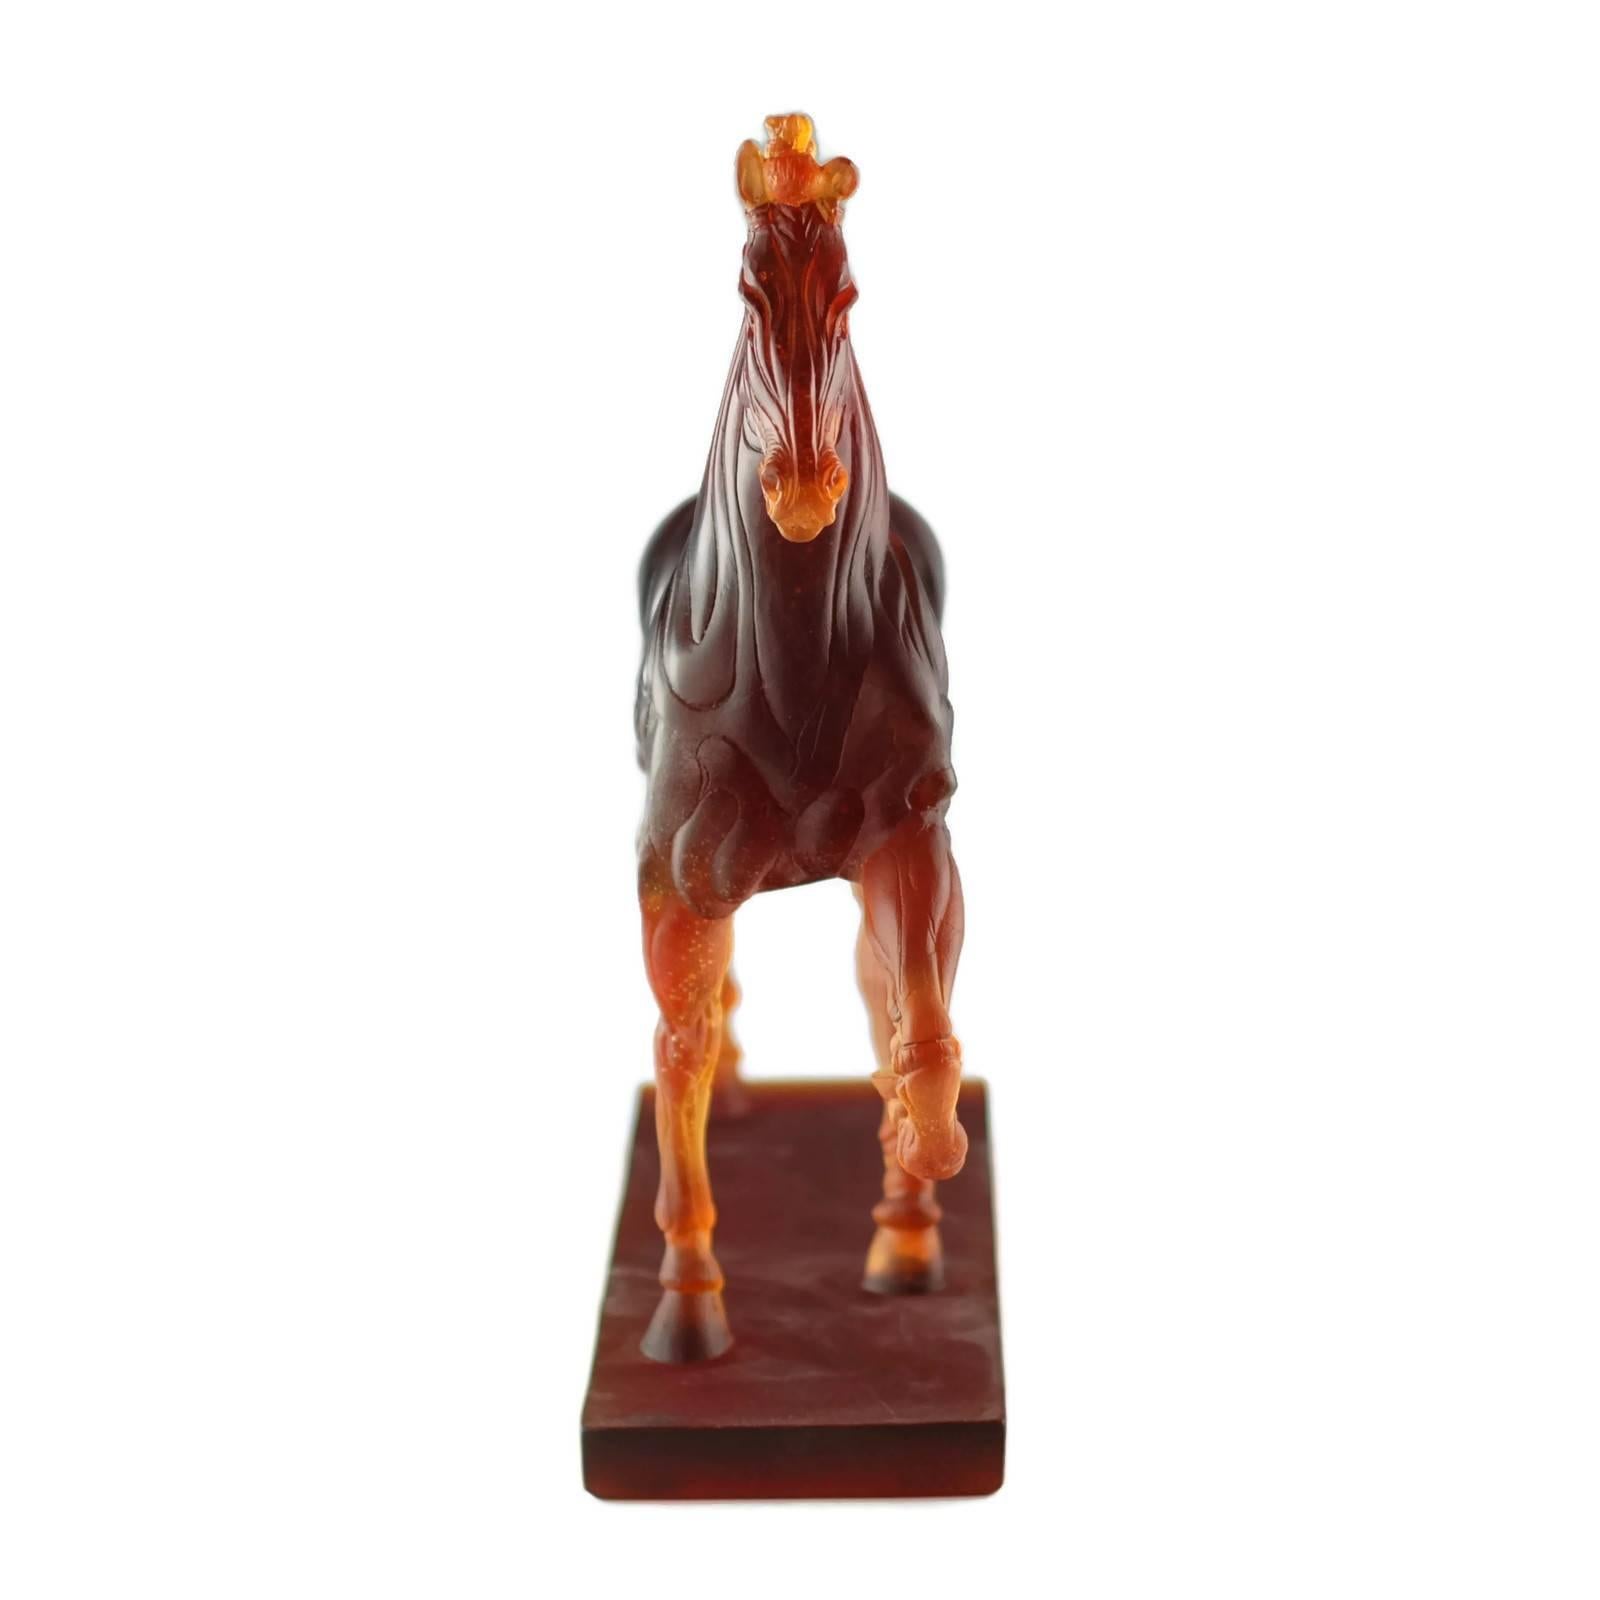 French Ludovico De Luigi for Daum Limited Edition Equine Sculpture